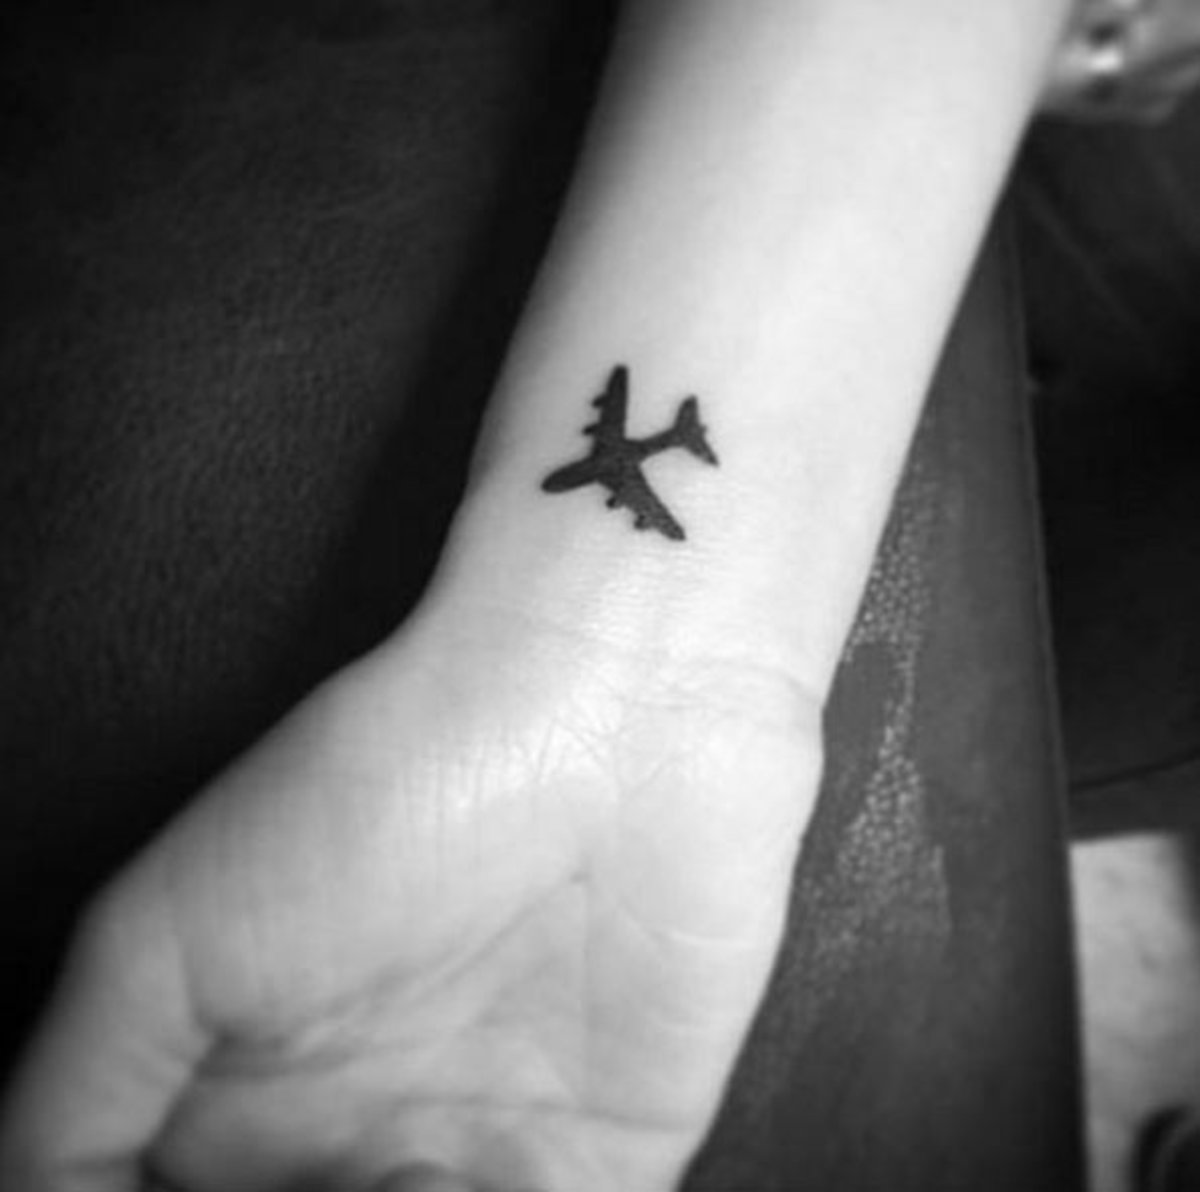 Heart and plane temporary tattoo